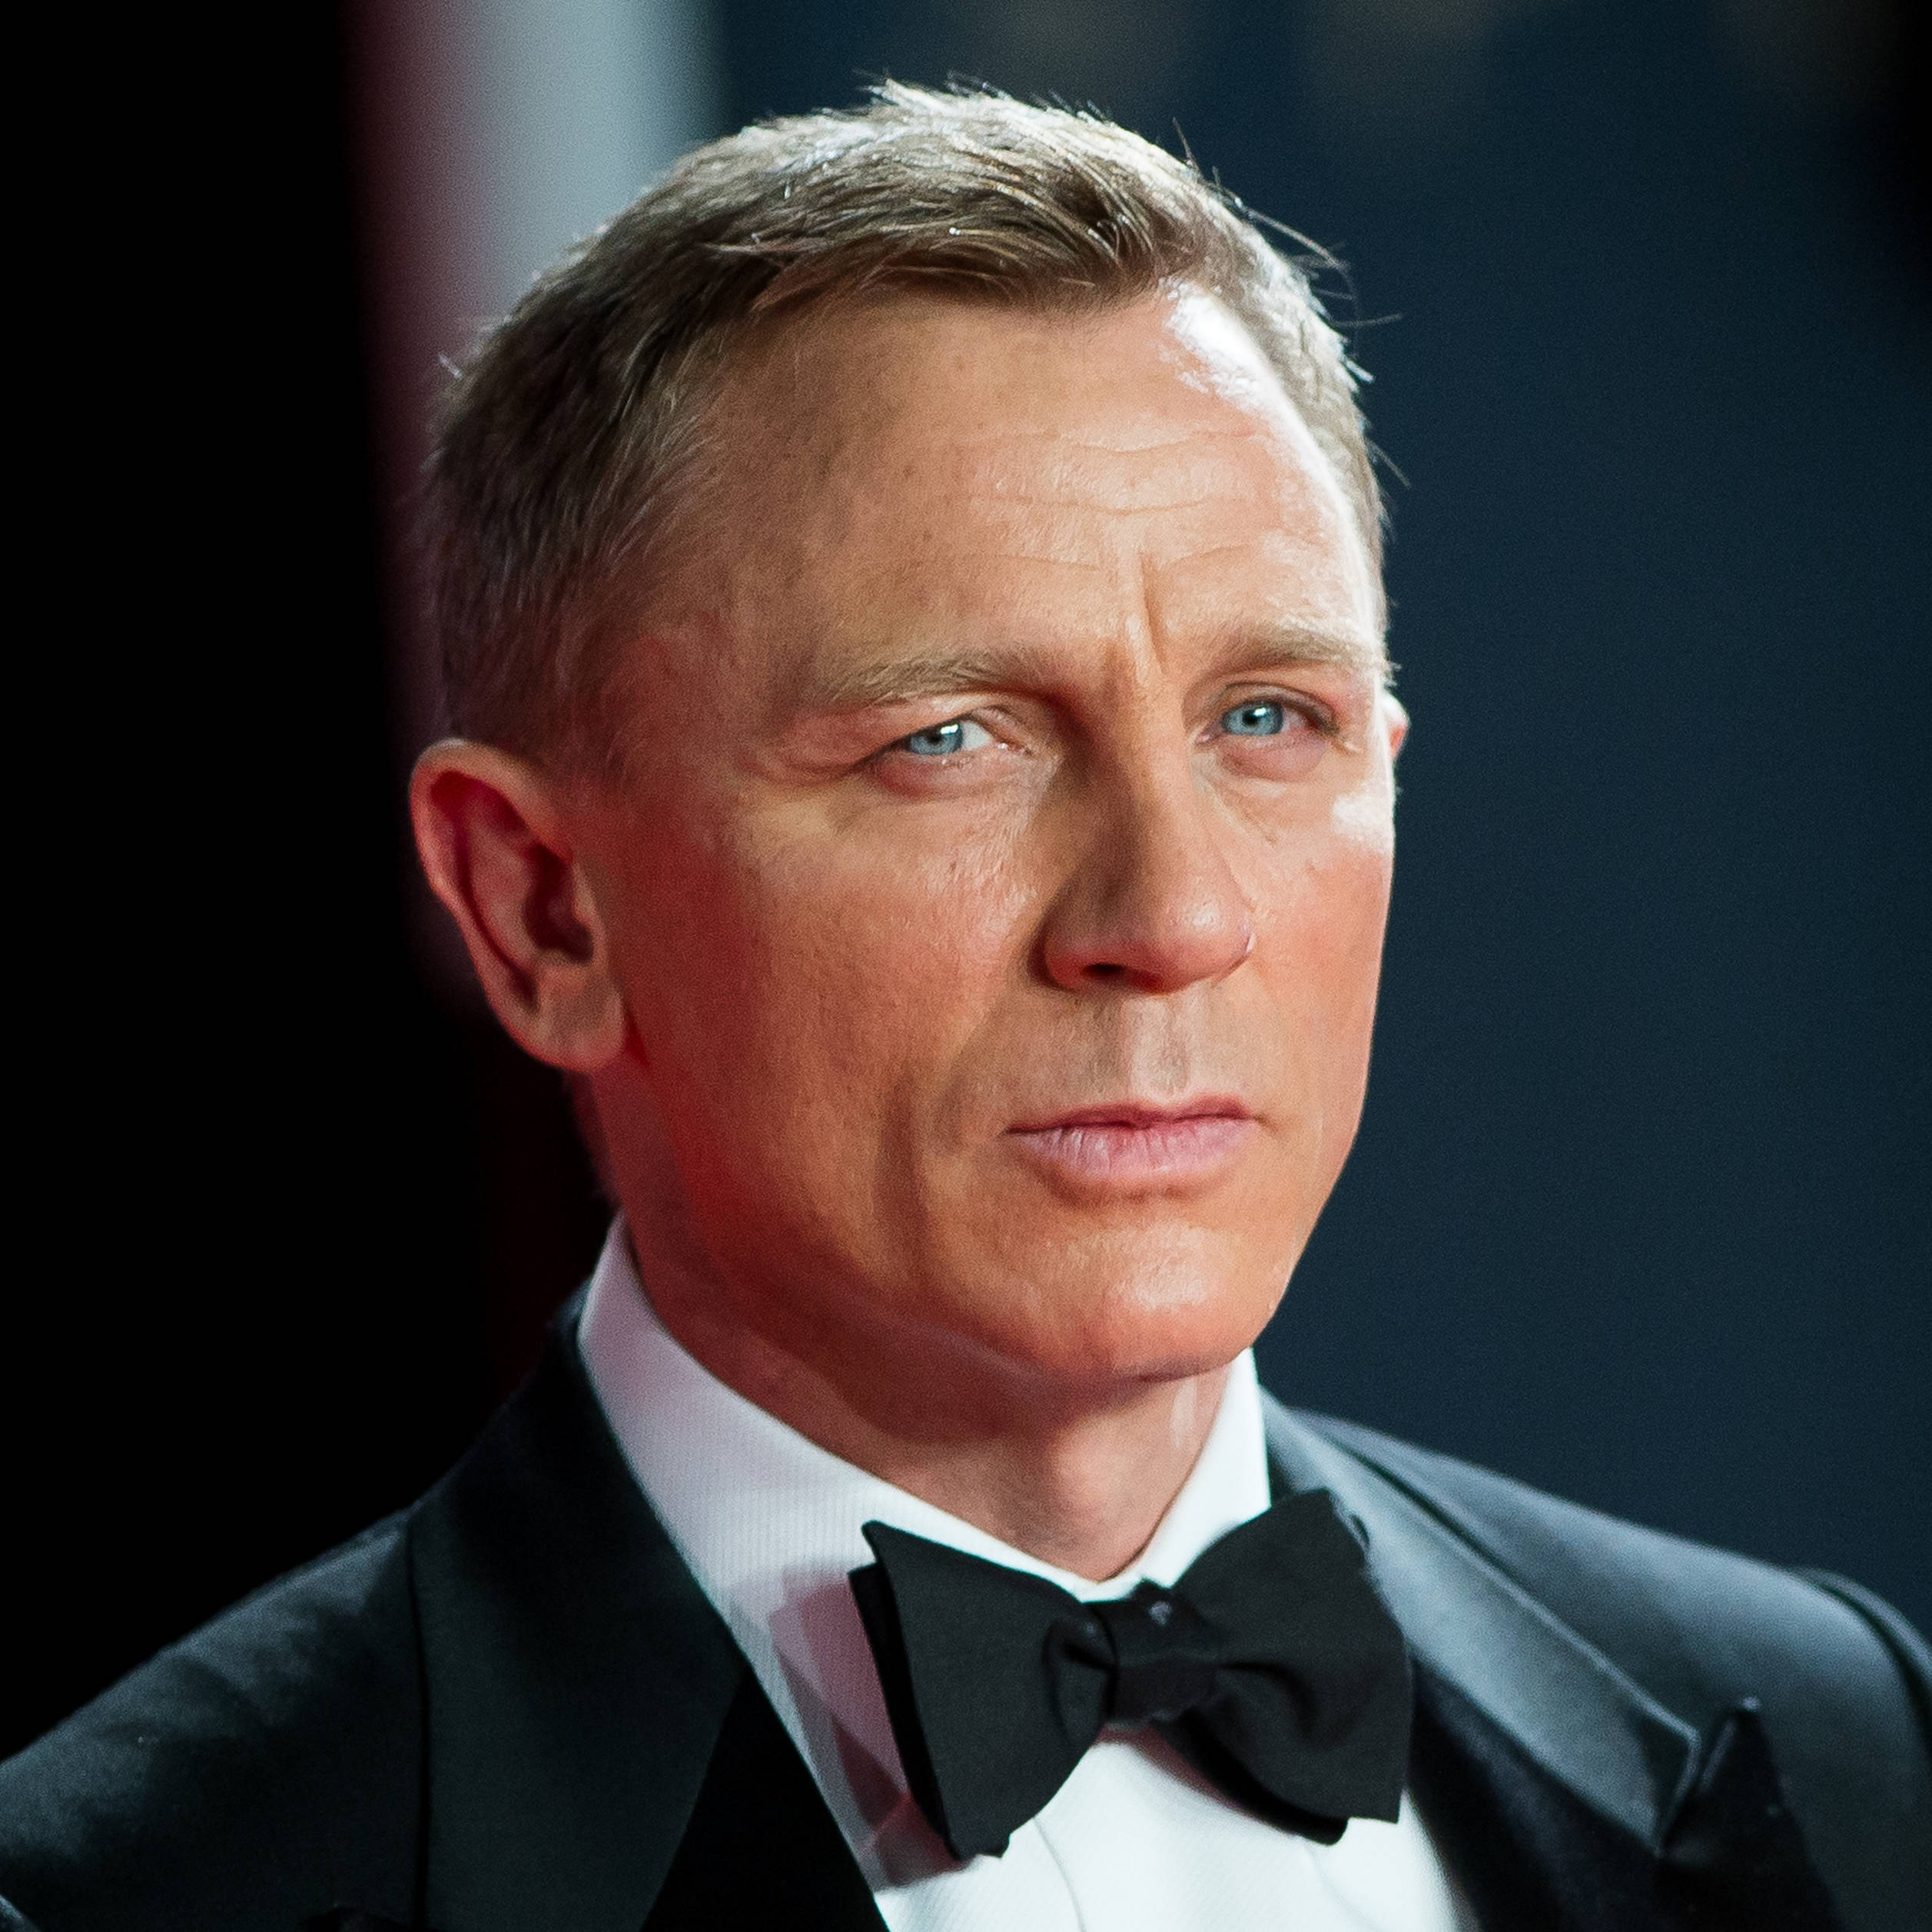 Daniel Craig Young Photos: James Bond Actor Through The Years ...